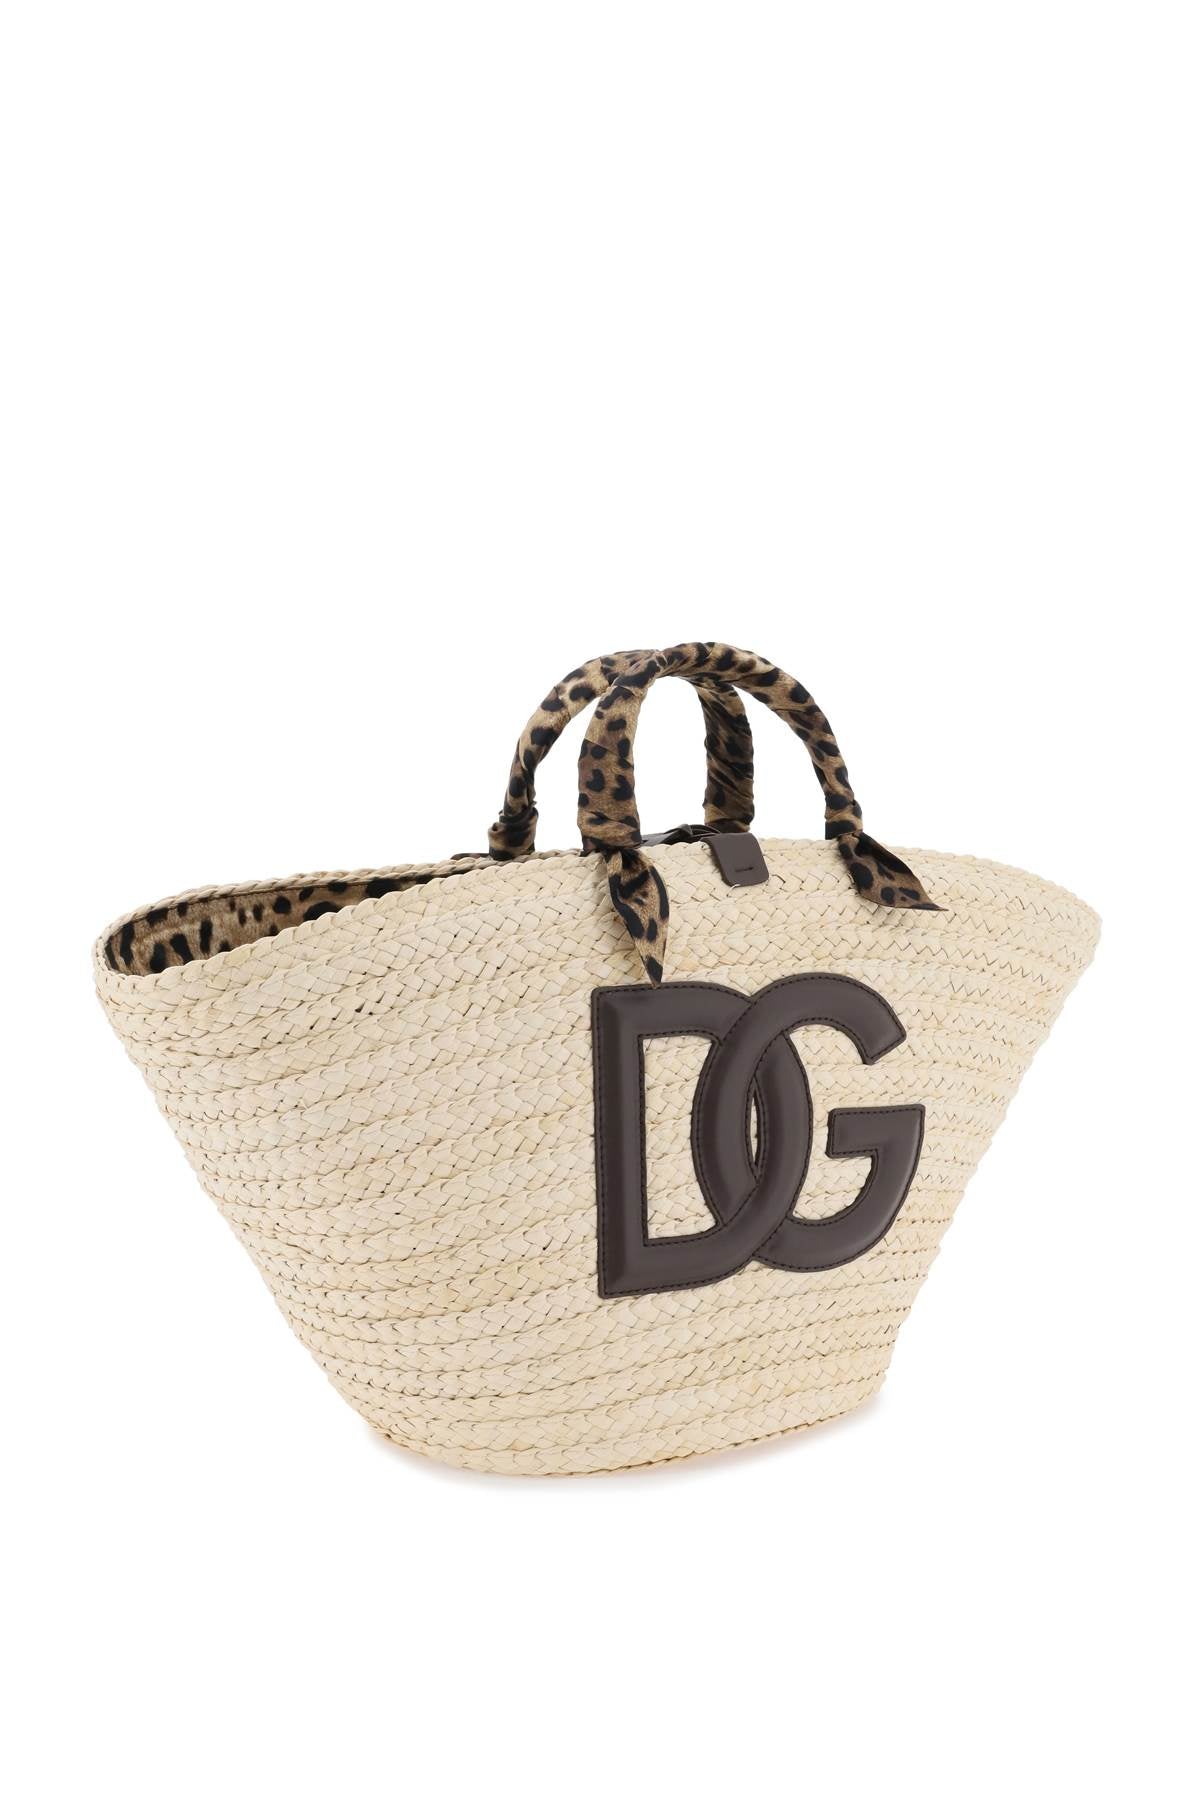 DOLCE & GABBANA Kendra Medium Multicolor Straw & Calfskin Handbag with Leopard Print Accents and Top Handle